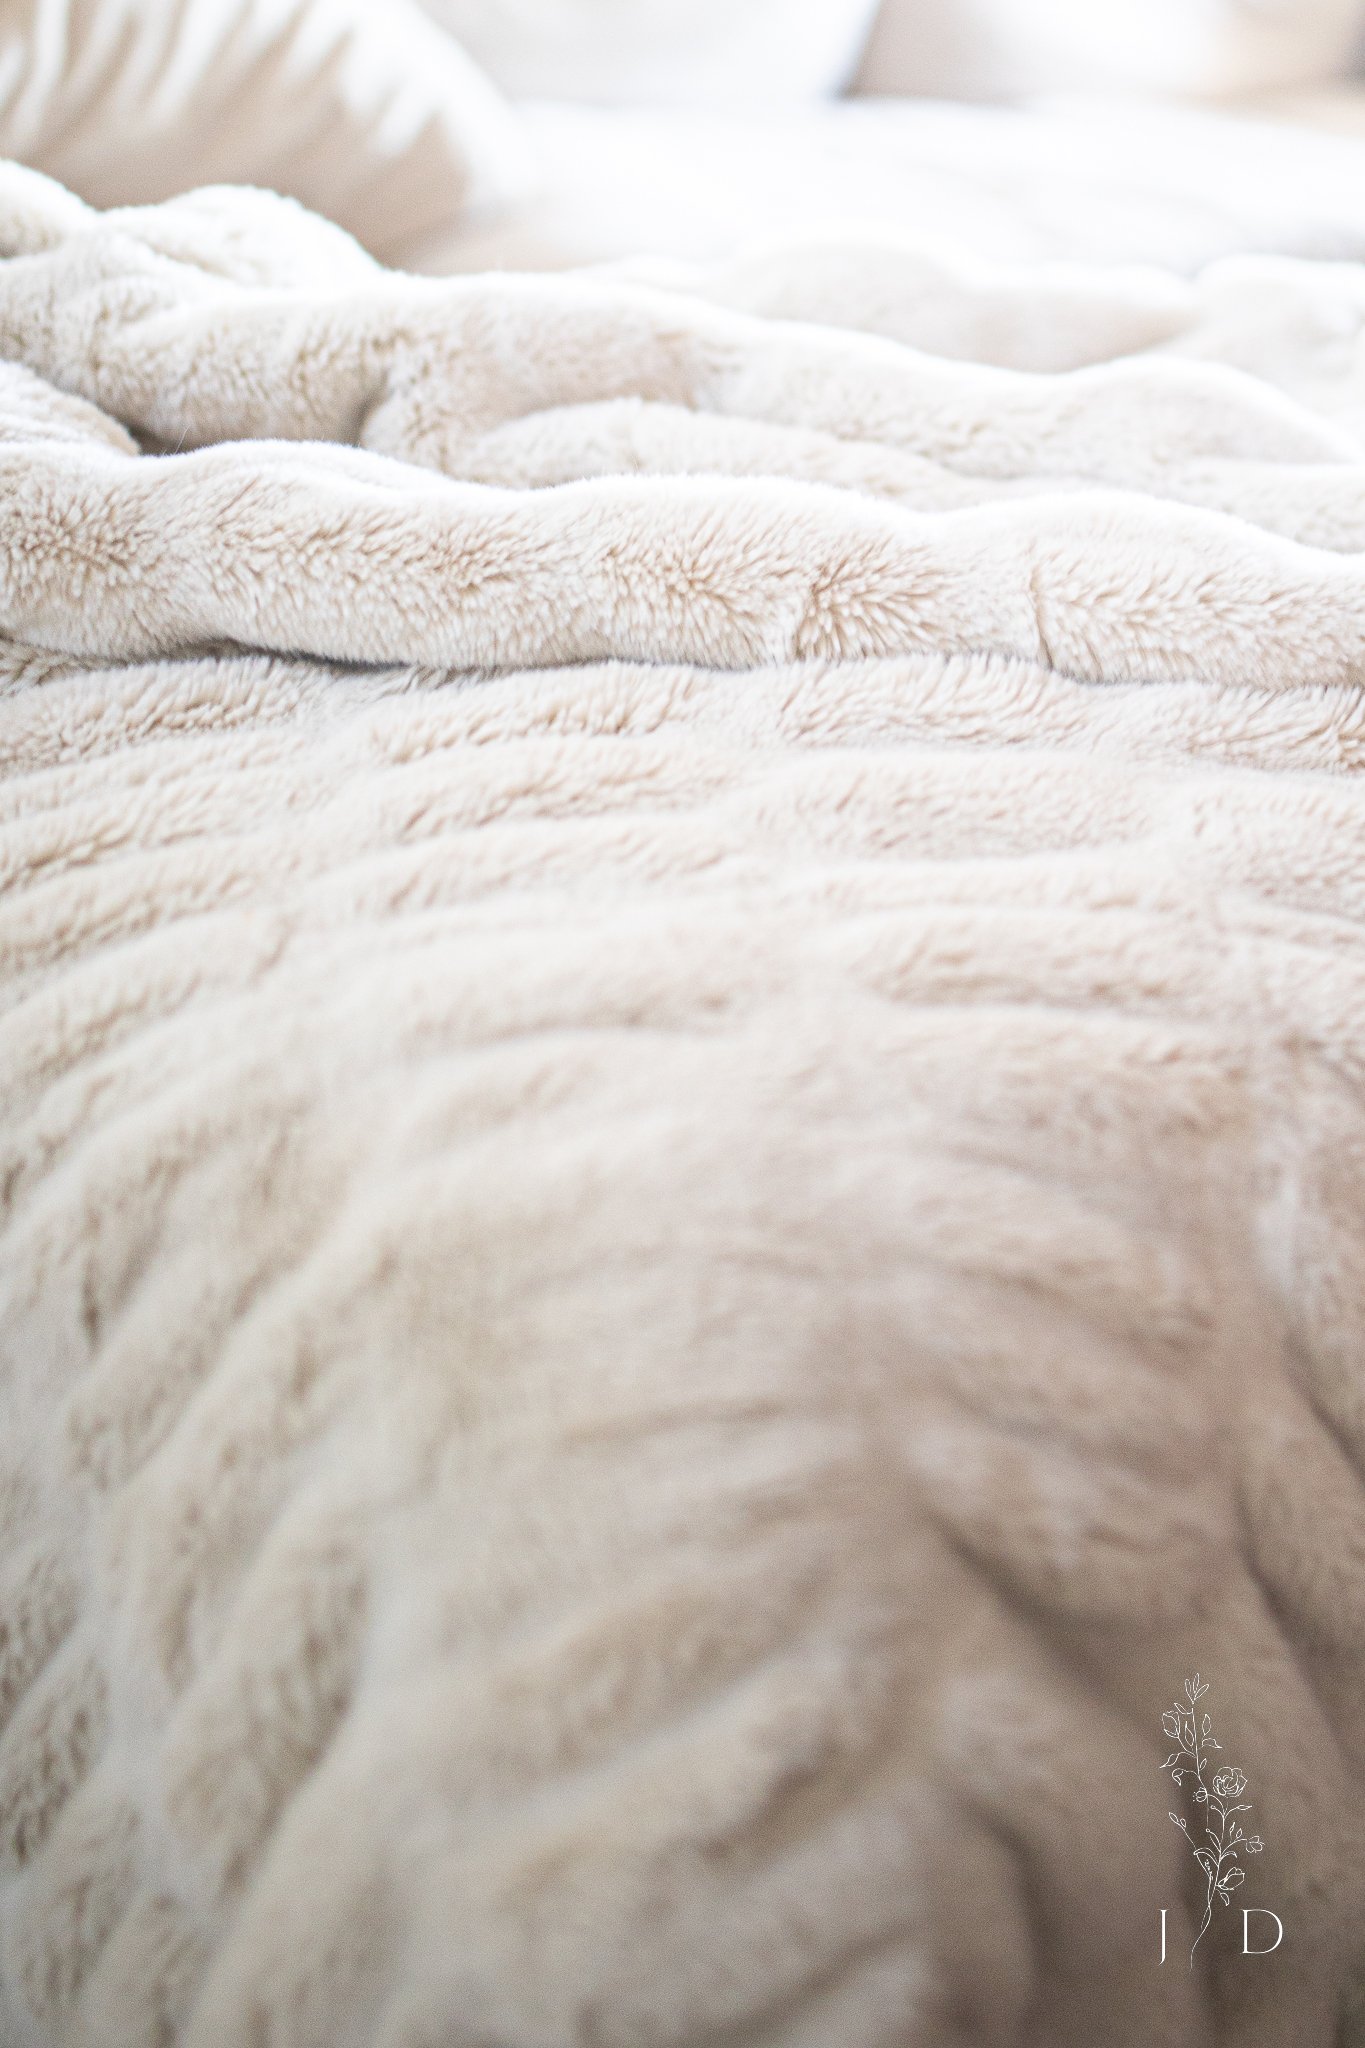 Luxury Blanket with pleats draped on sofa